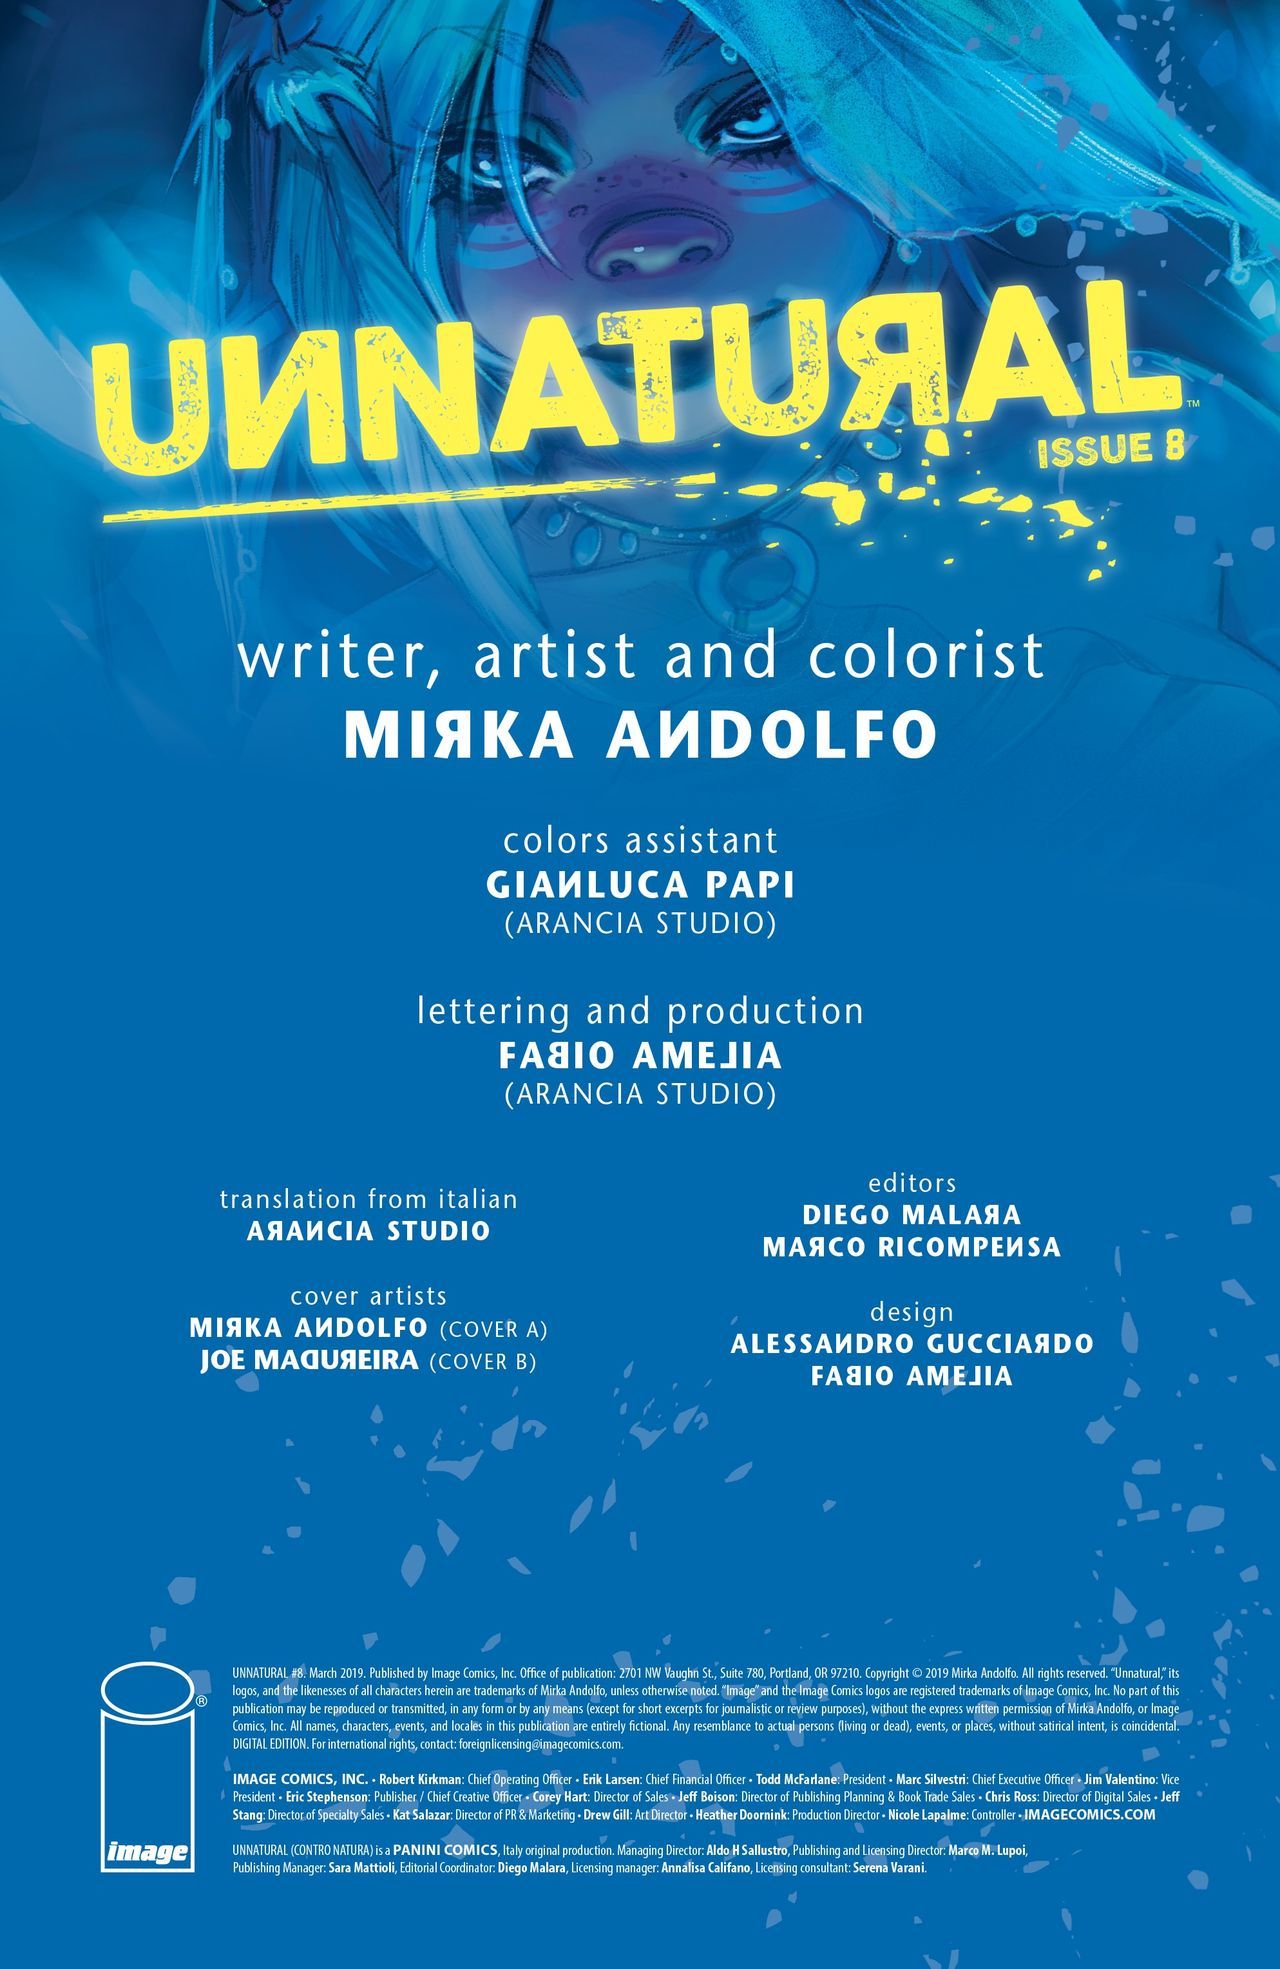 Unnatural Issue 8 - Mirka Andolfo page 2